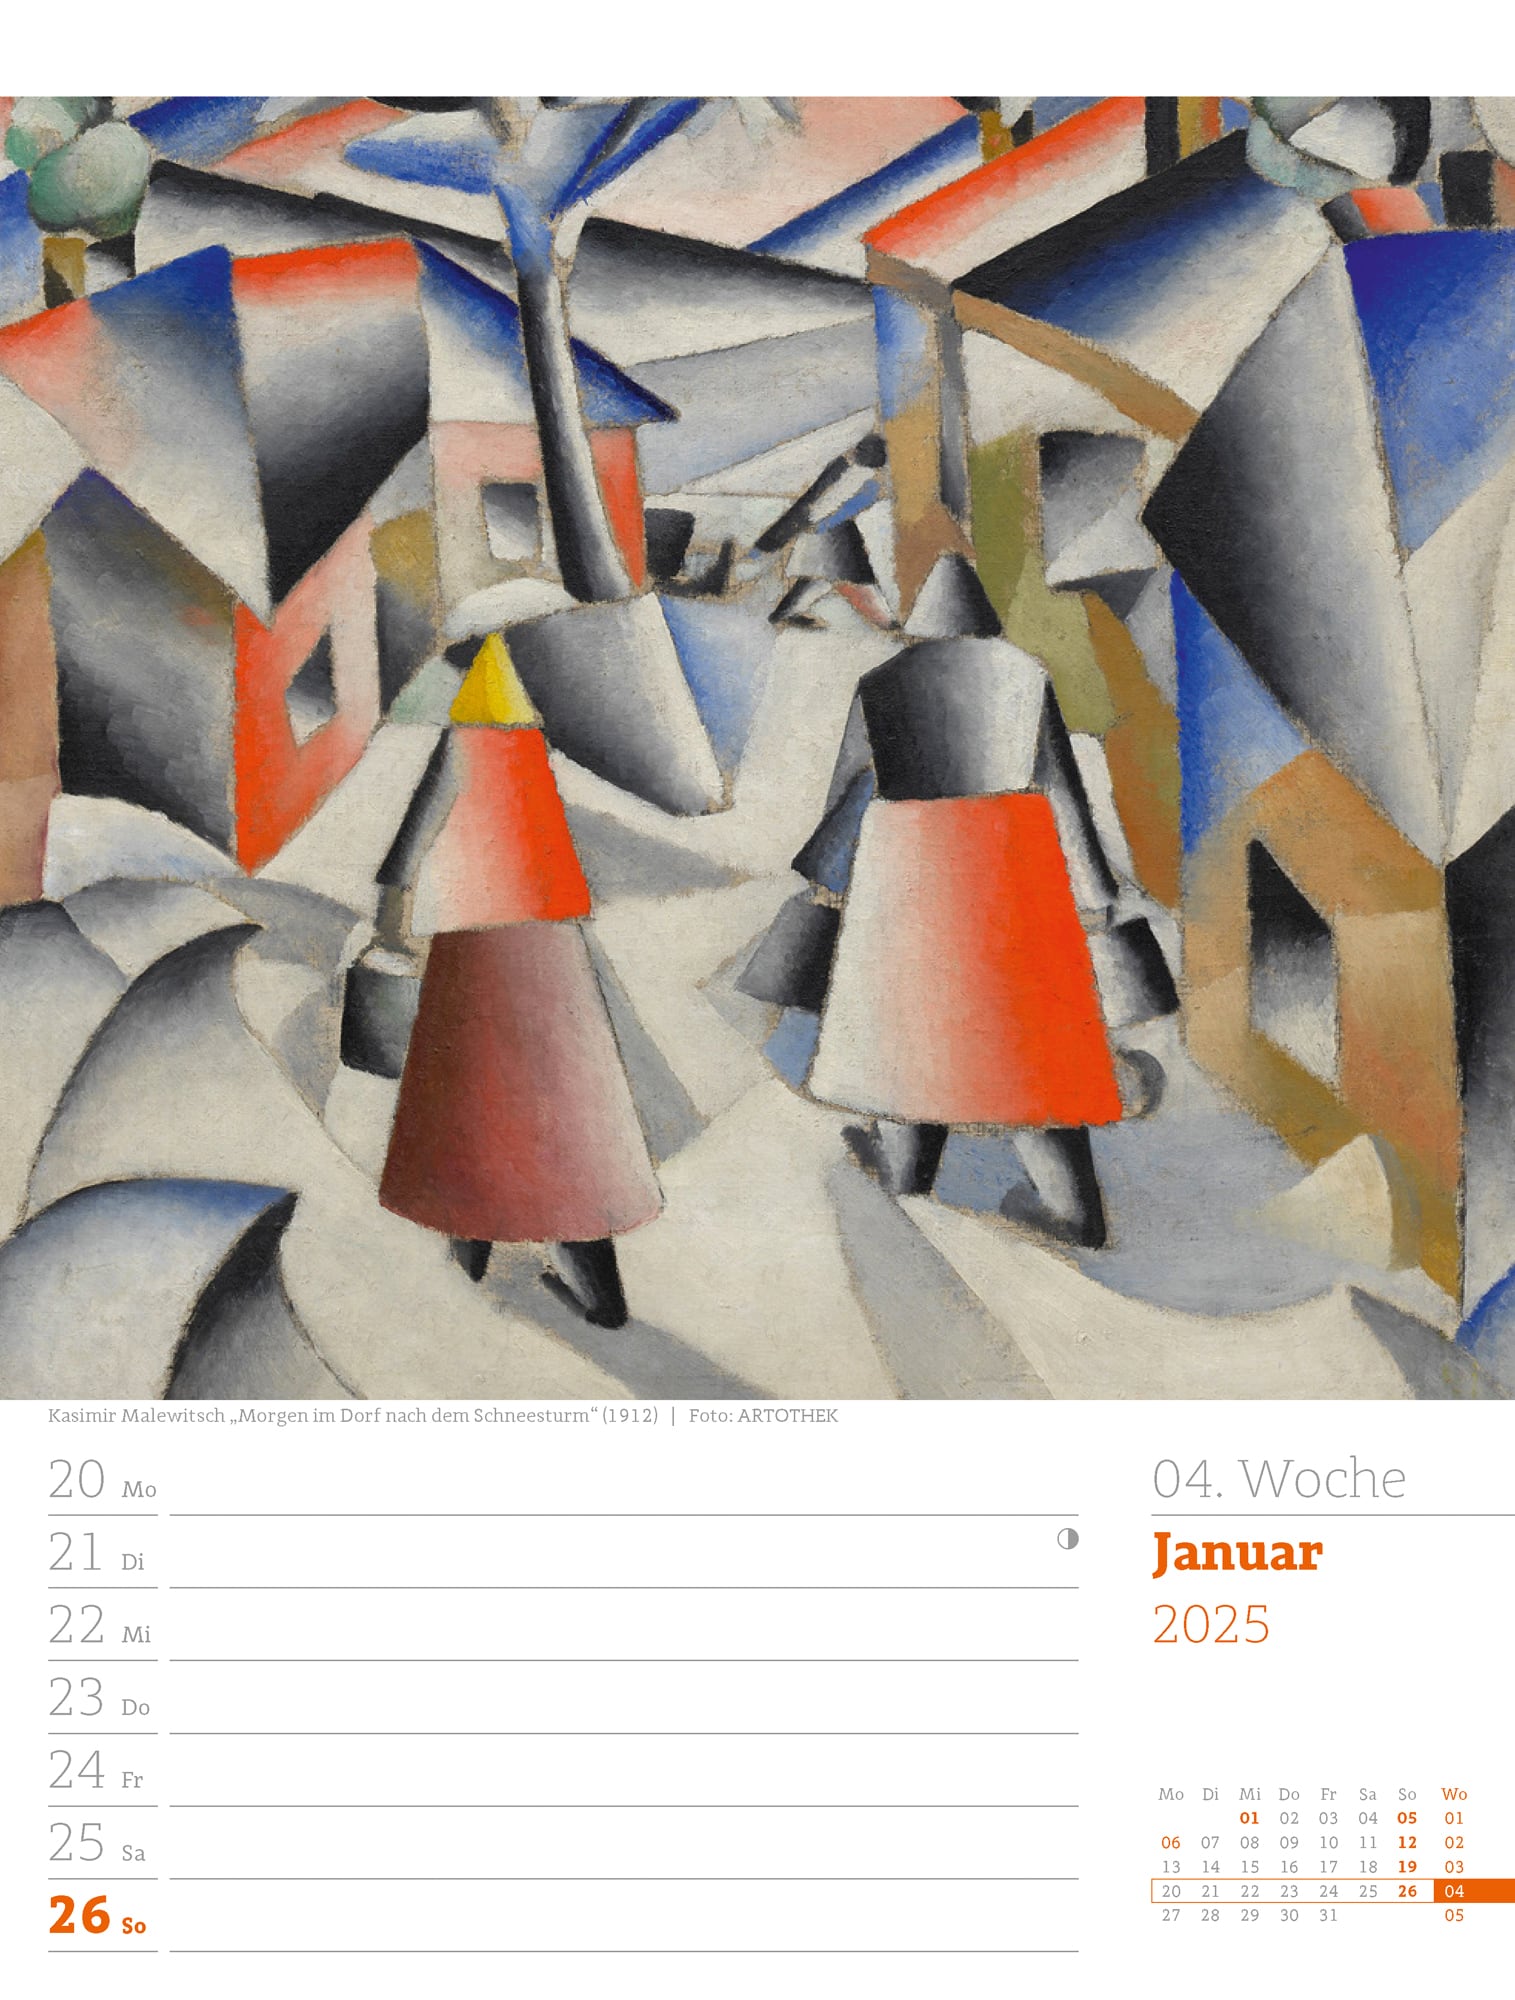 Ackermann Calendar World of Art 2025 - Weekly Planner - Inside View 07